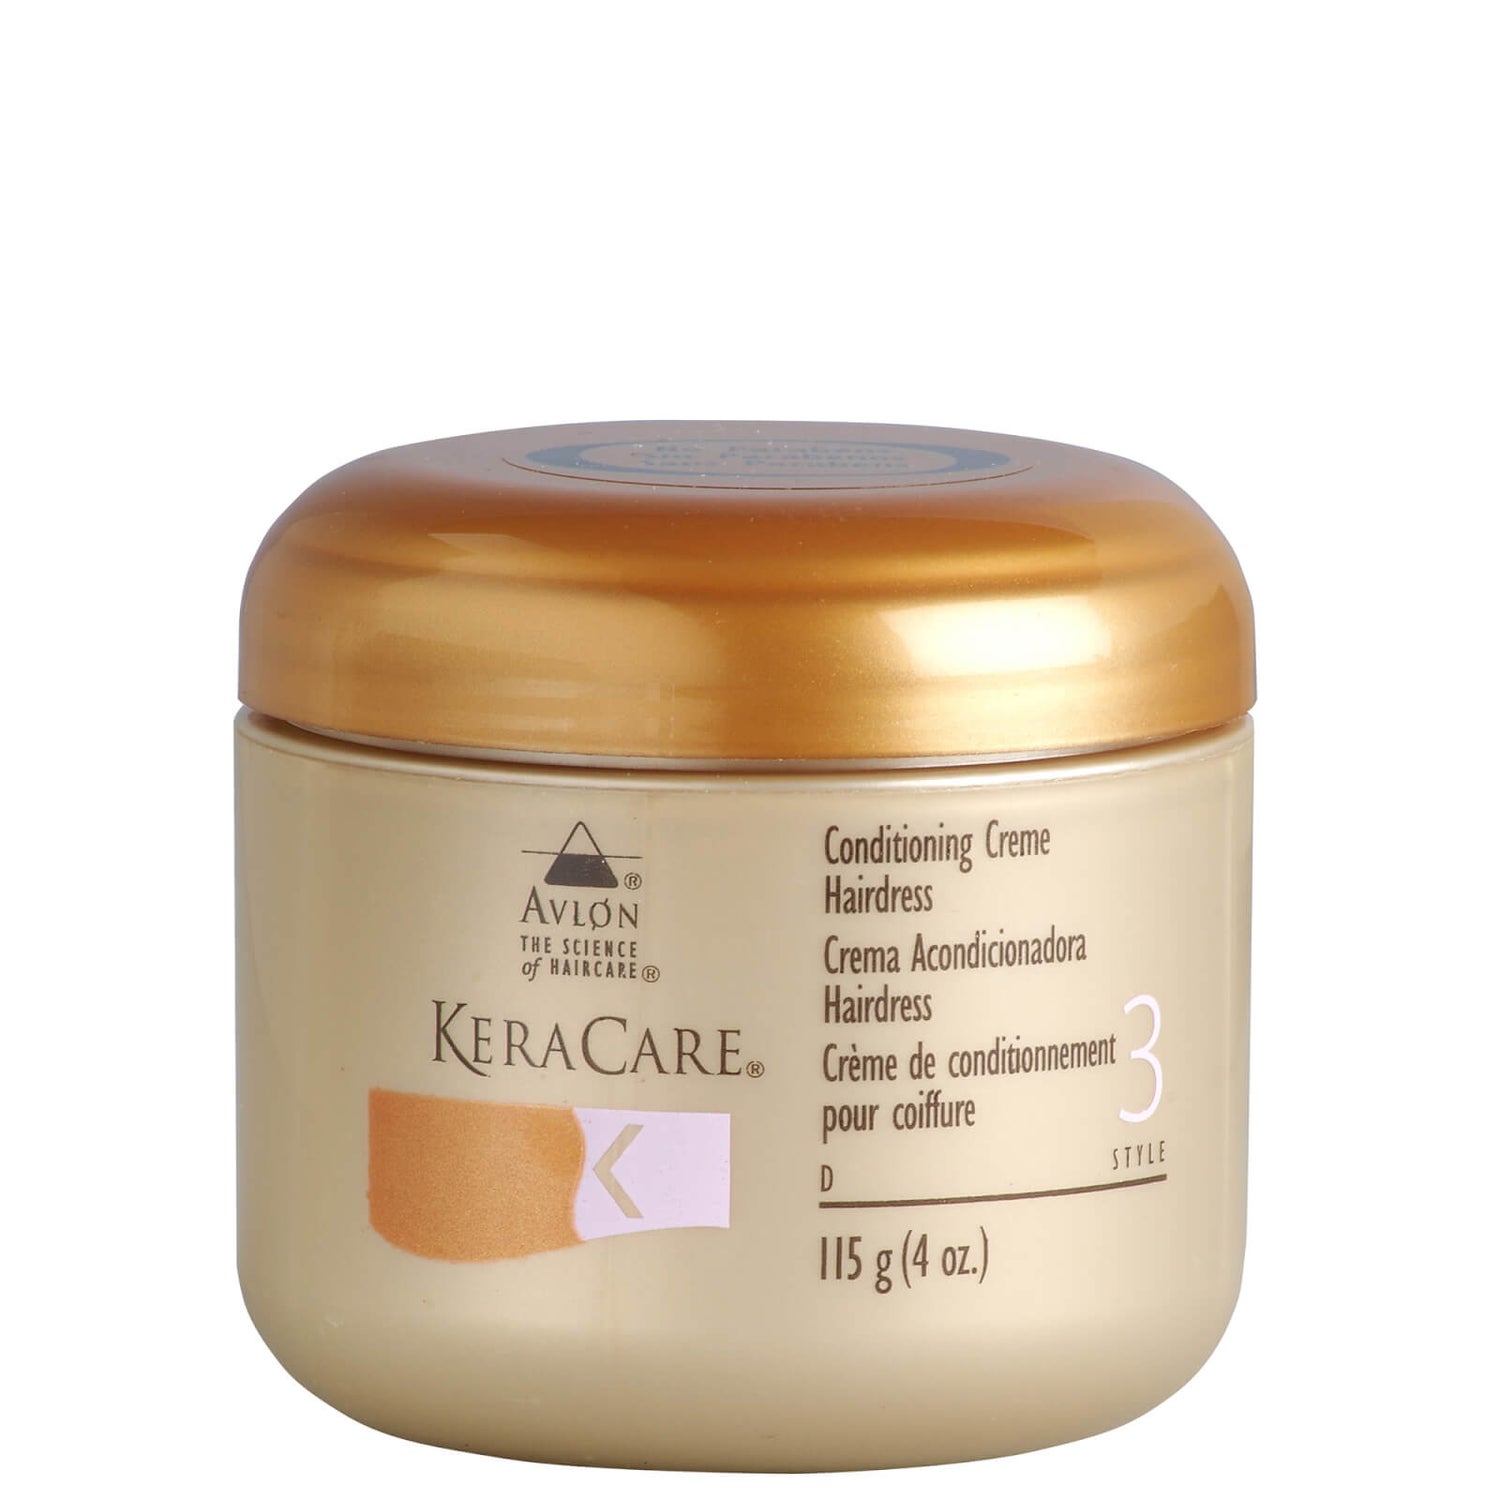 Crema KeraCare Crème Hairdress